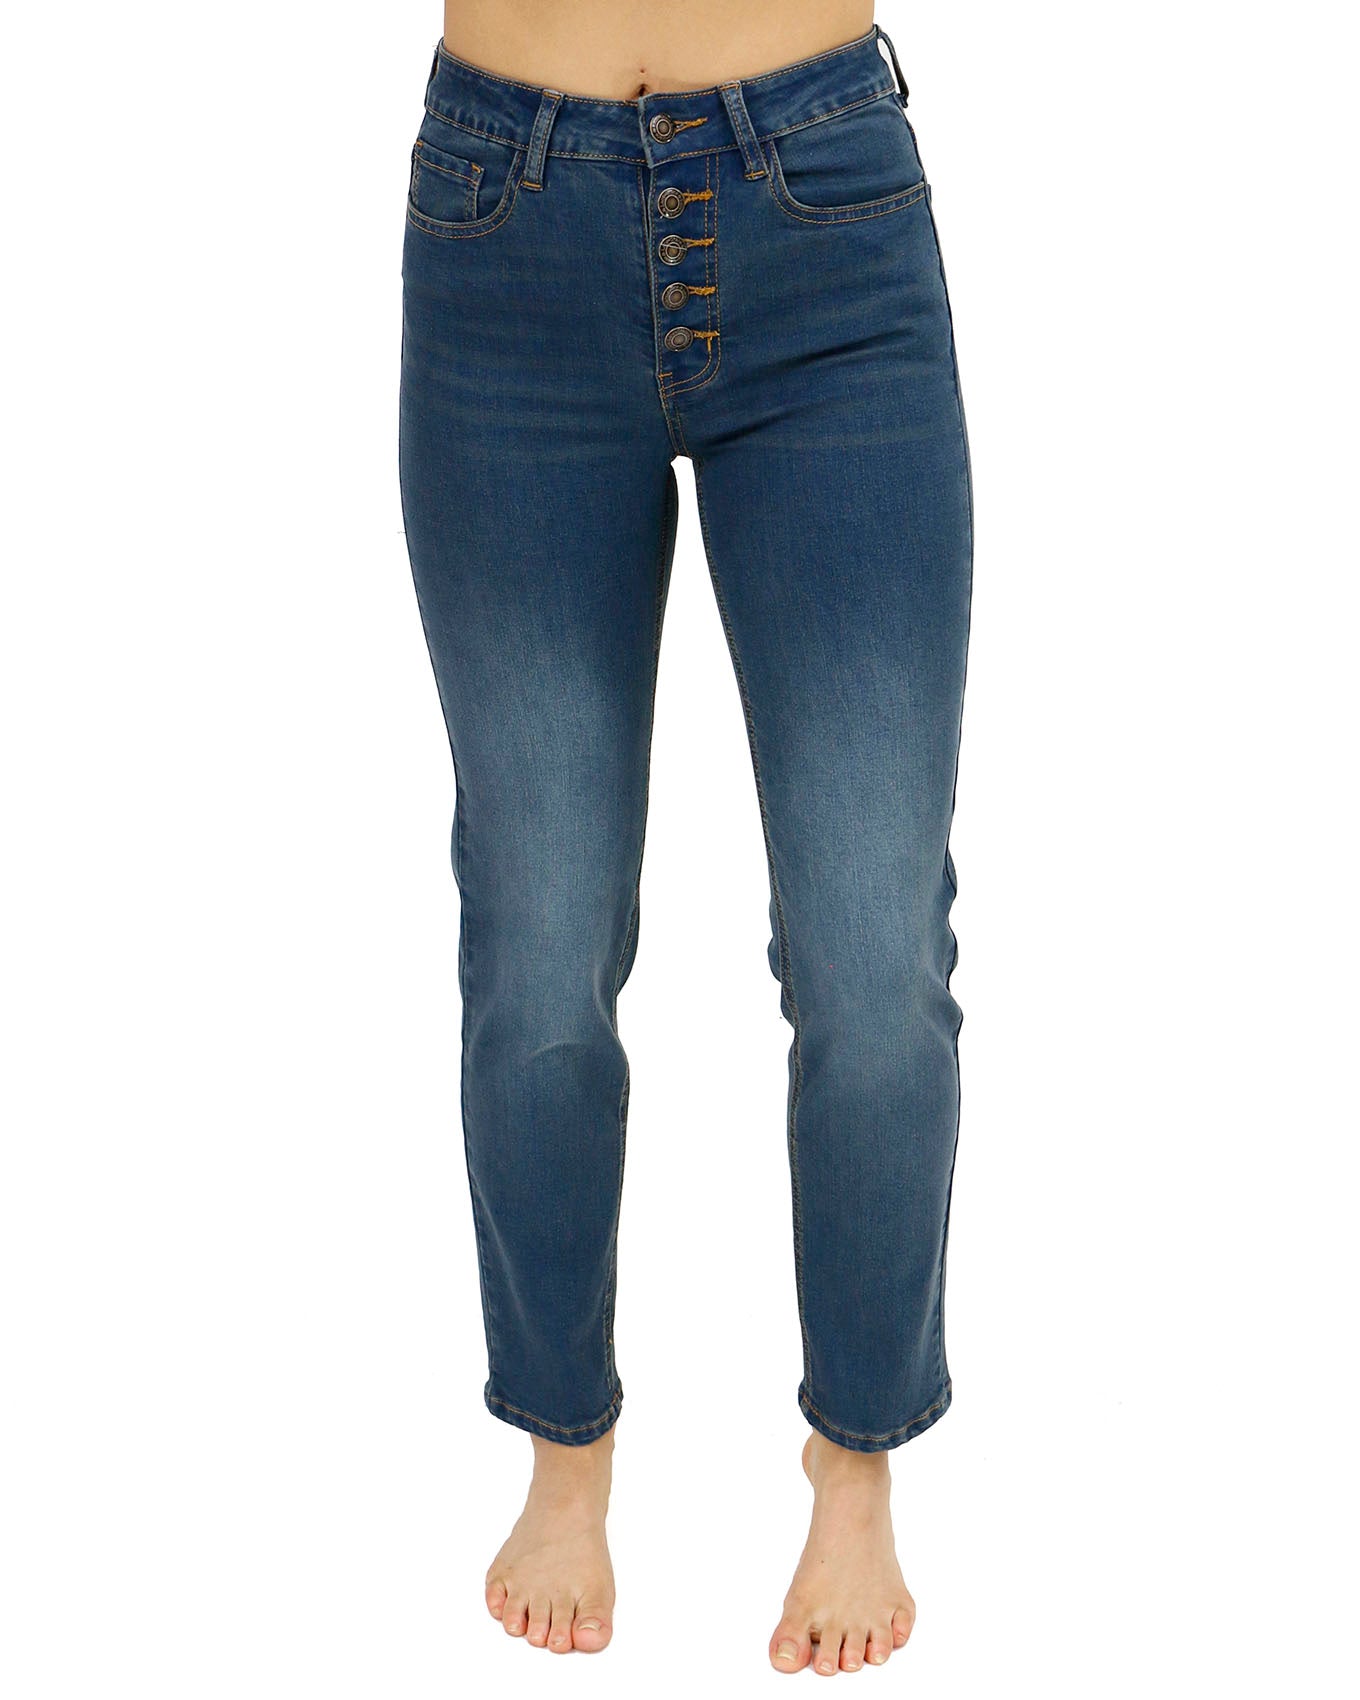 D Jeans Button Fly Jeans Women's Size 8 Blue Light Wash Denim Straight  Stretch